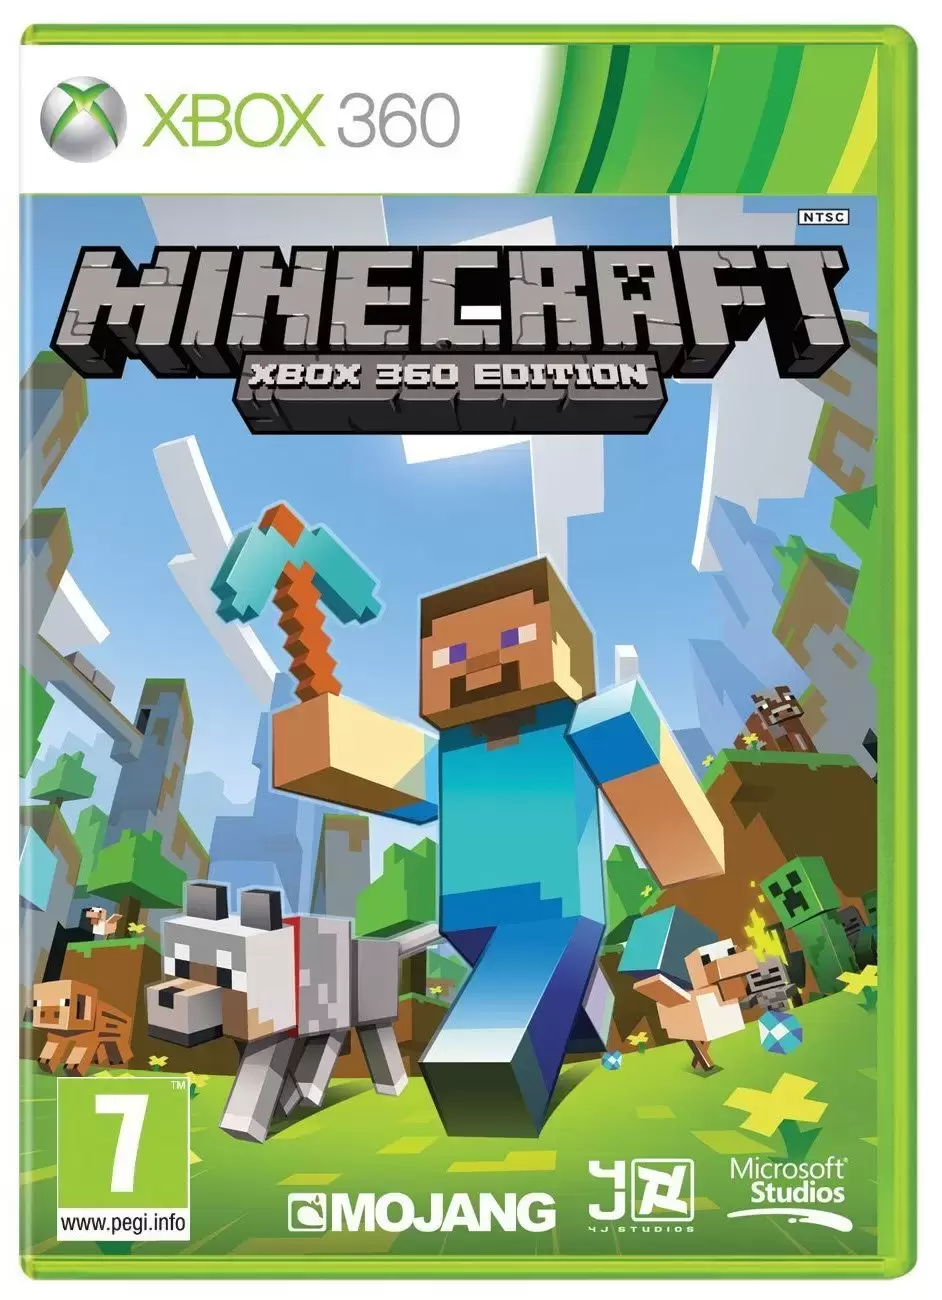 XBOX 360 Games - Minecraft Xbox 360 edition